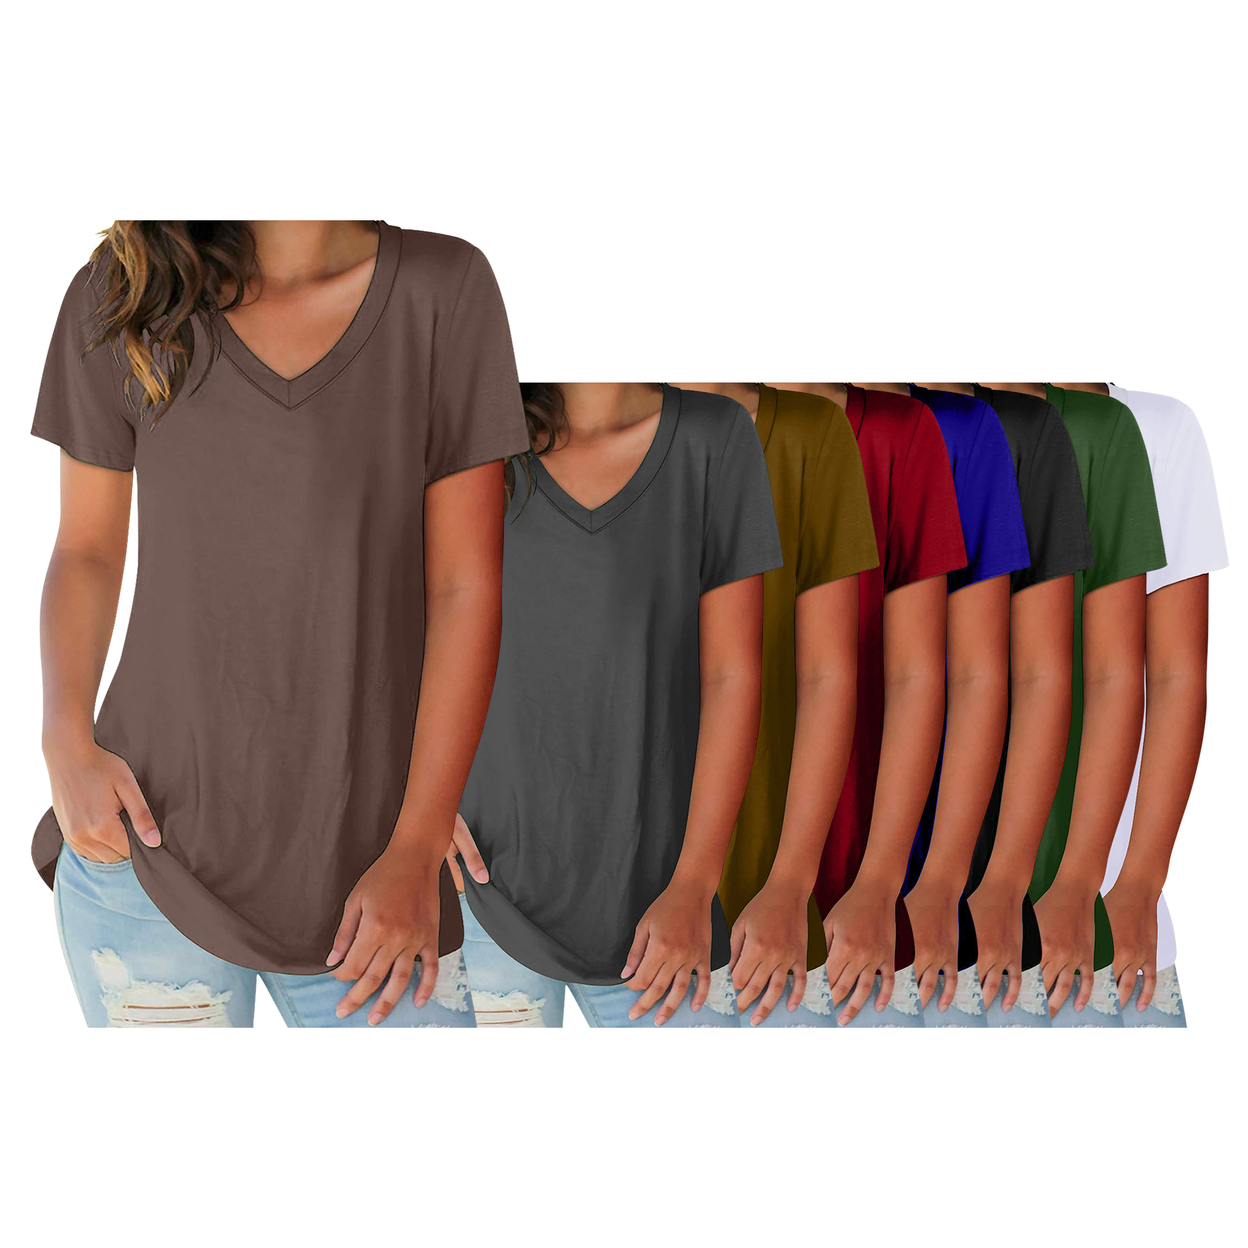 6-Pack: Women's Ultra Soft Smooth Cotton Blend Basic V-Neck Short Sleeve Shirts - Xx-large